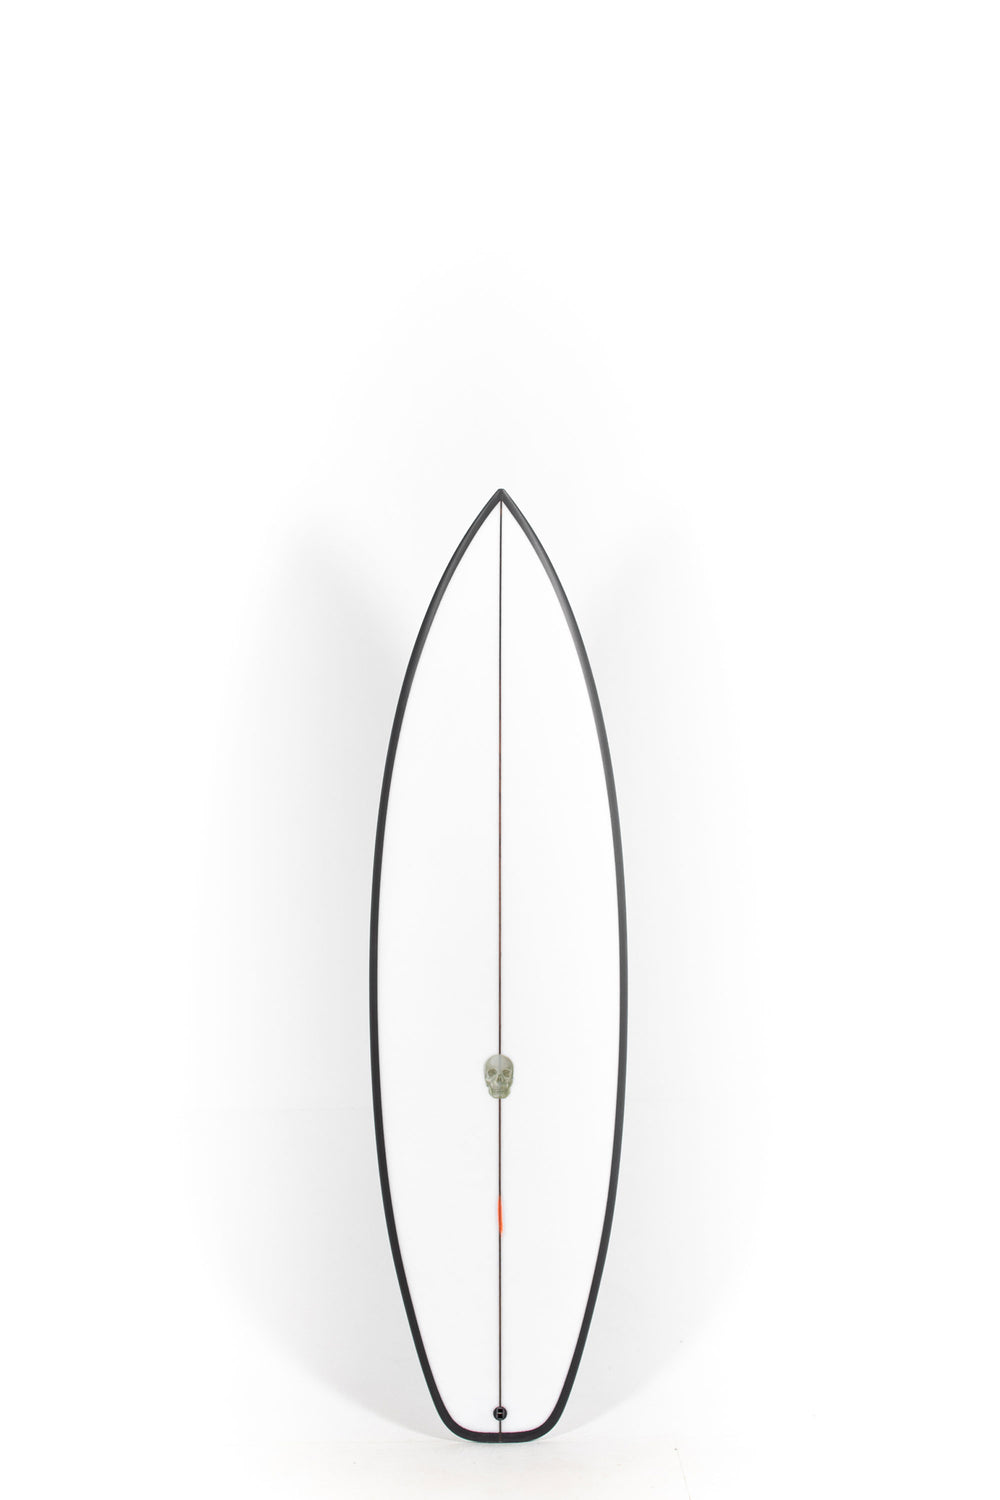 Christenson Surfboards - OP2 - 5'8